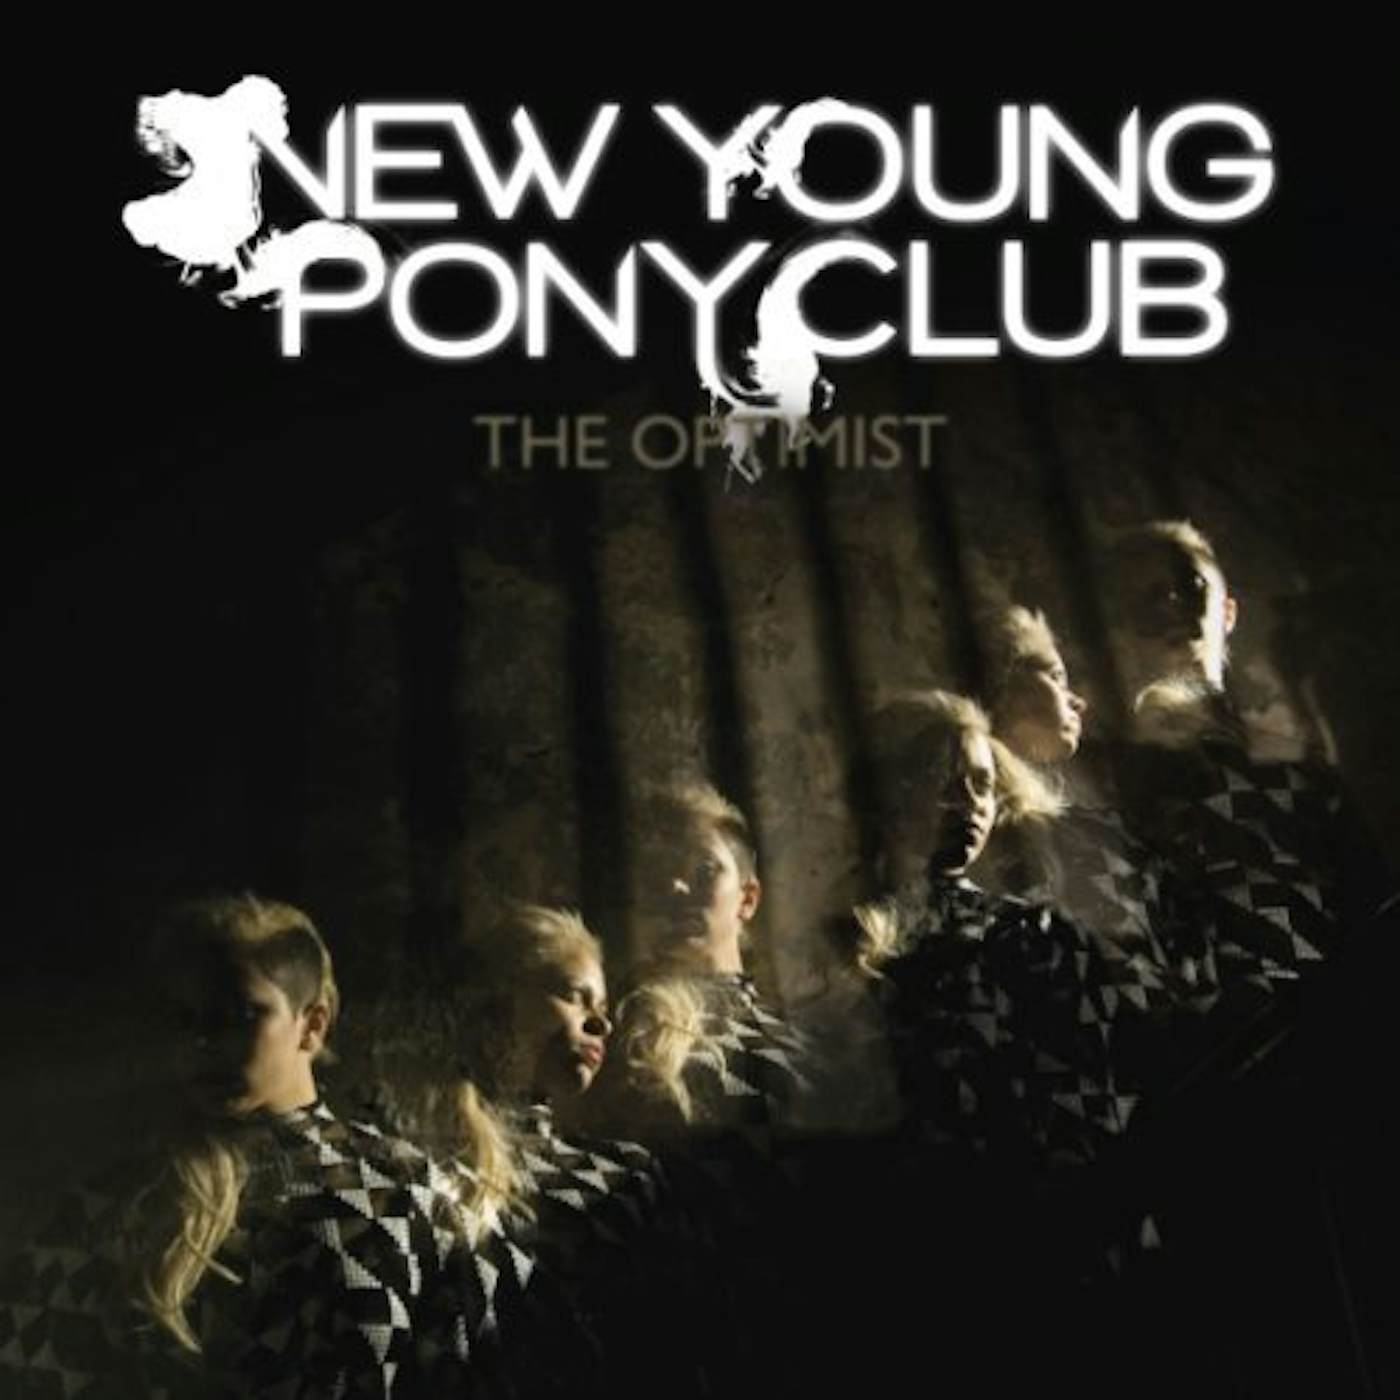 New Young Pony Club OPTIMIST Vinyl Record